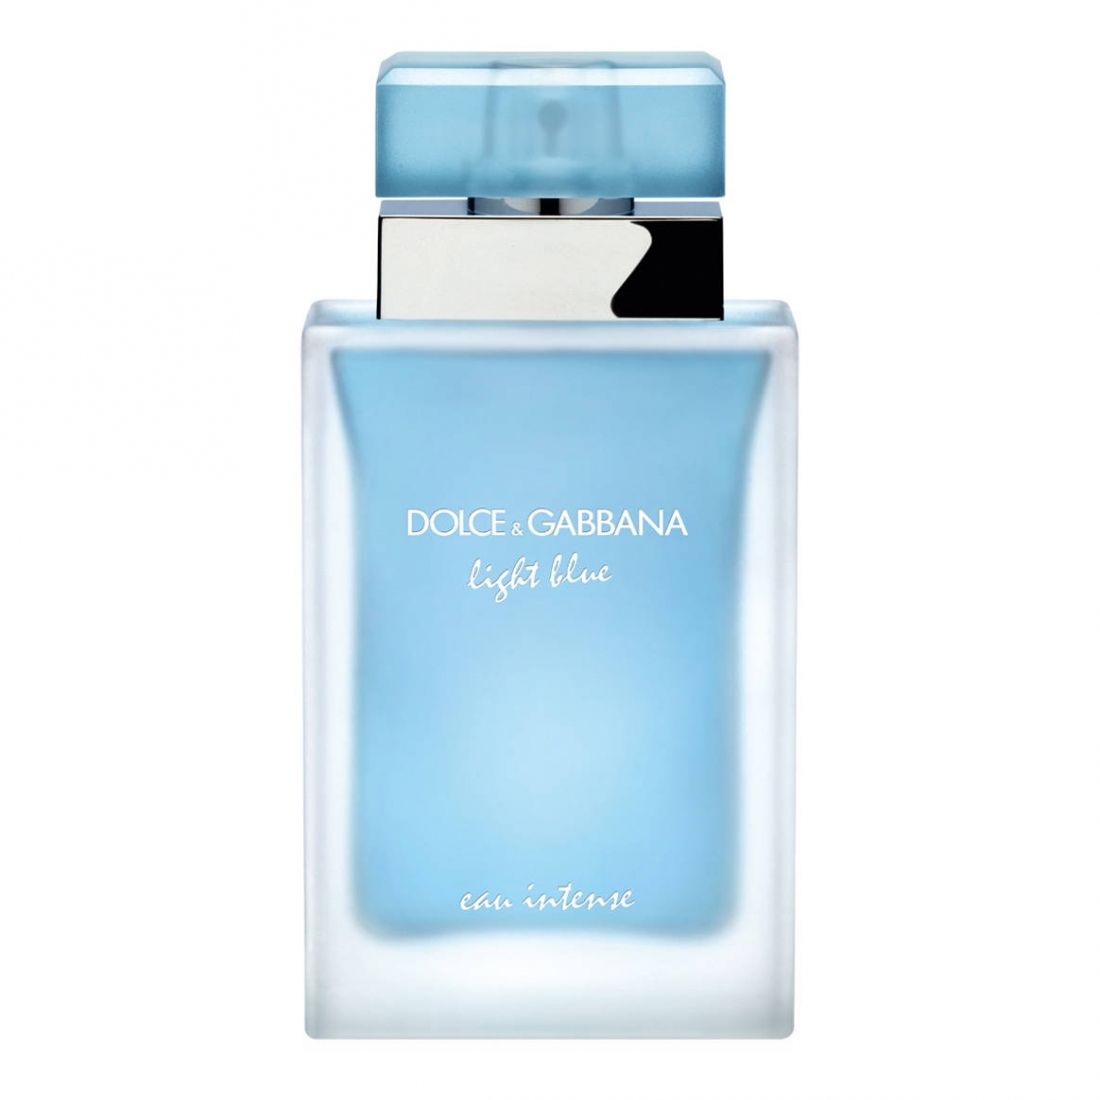 Dolce & Gabbana - Eau de parfum 'Light Blue Eau Intense' - 50 ml